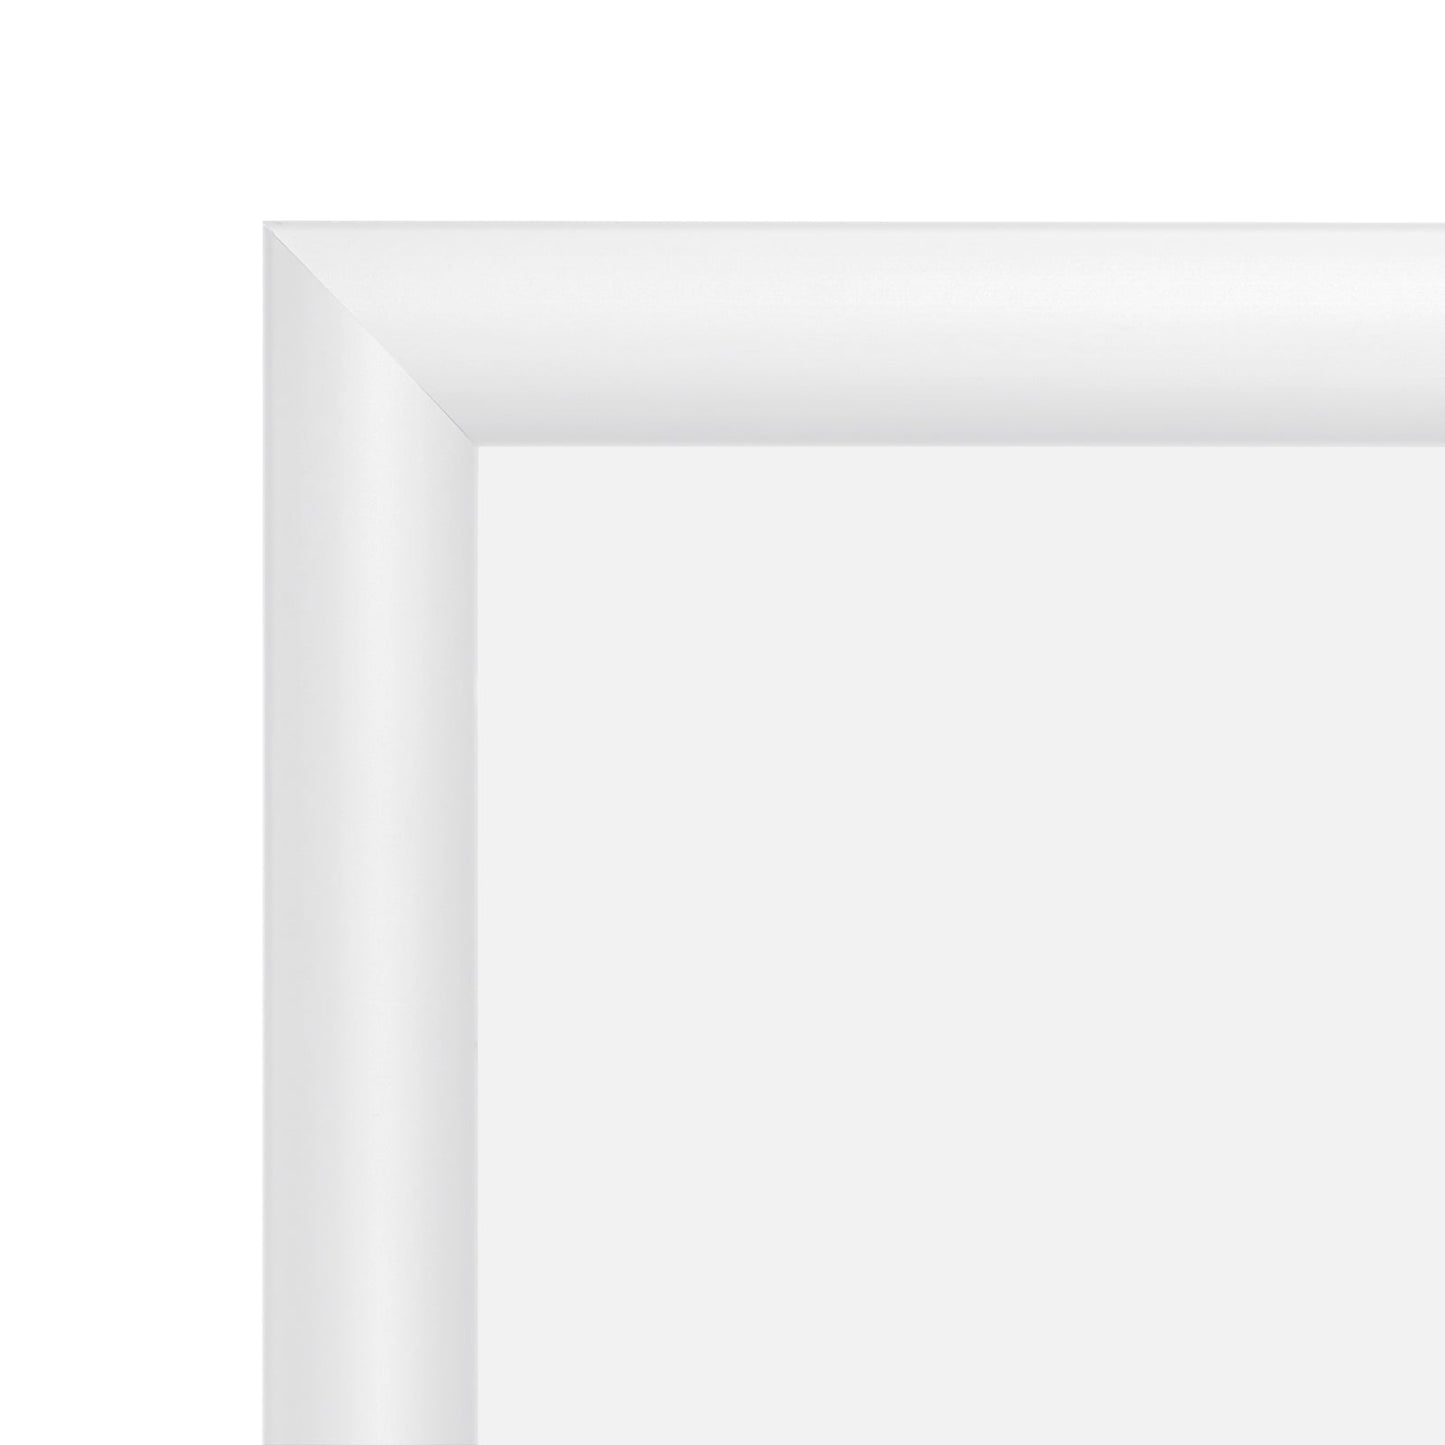 18x36 White SnapeZo® Snap Frame - 1.2" Profile - Snap Frames Direct